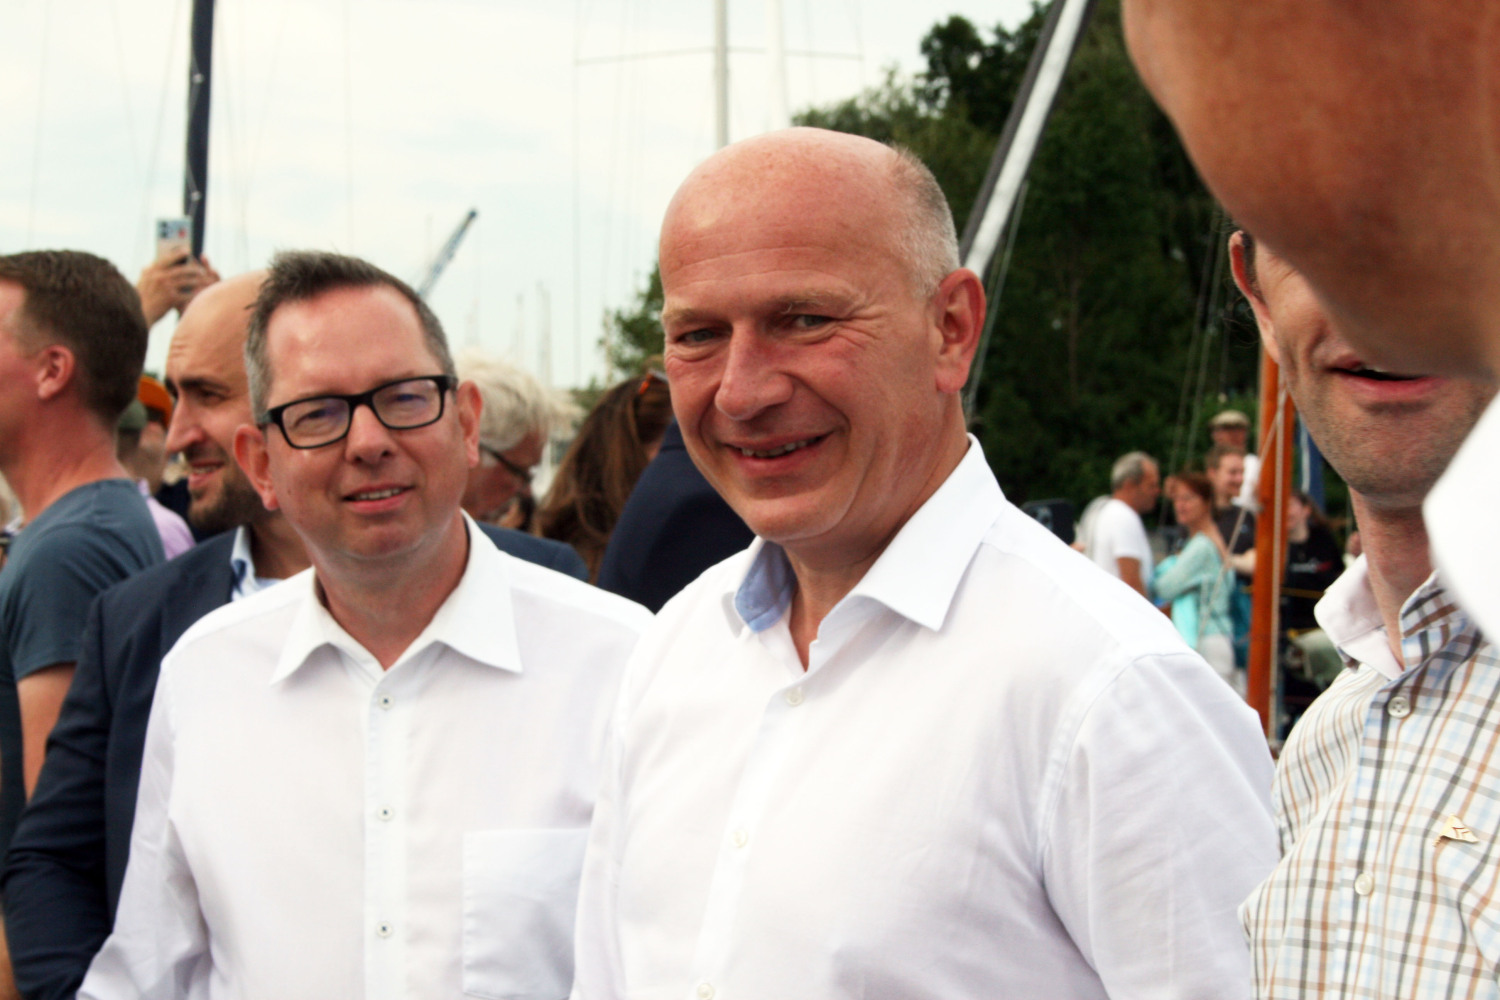 Bezirksbürgermeister Igel (li.) mit Regierendem Bürgermeister Wegner (re.)